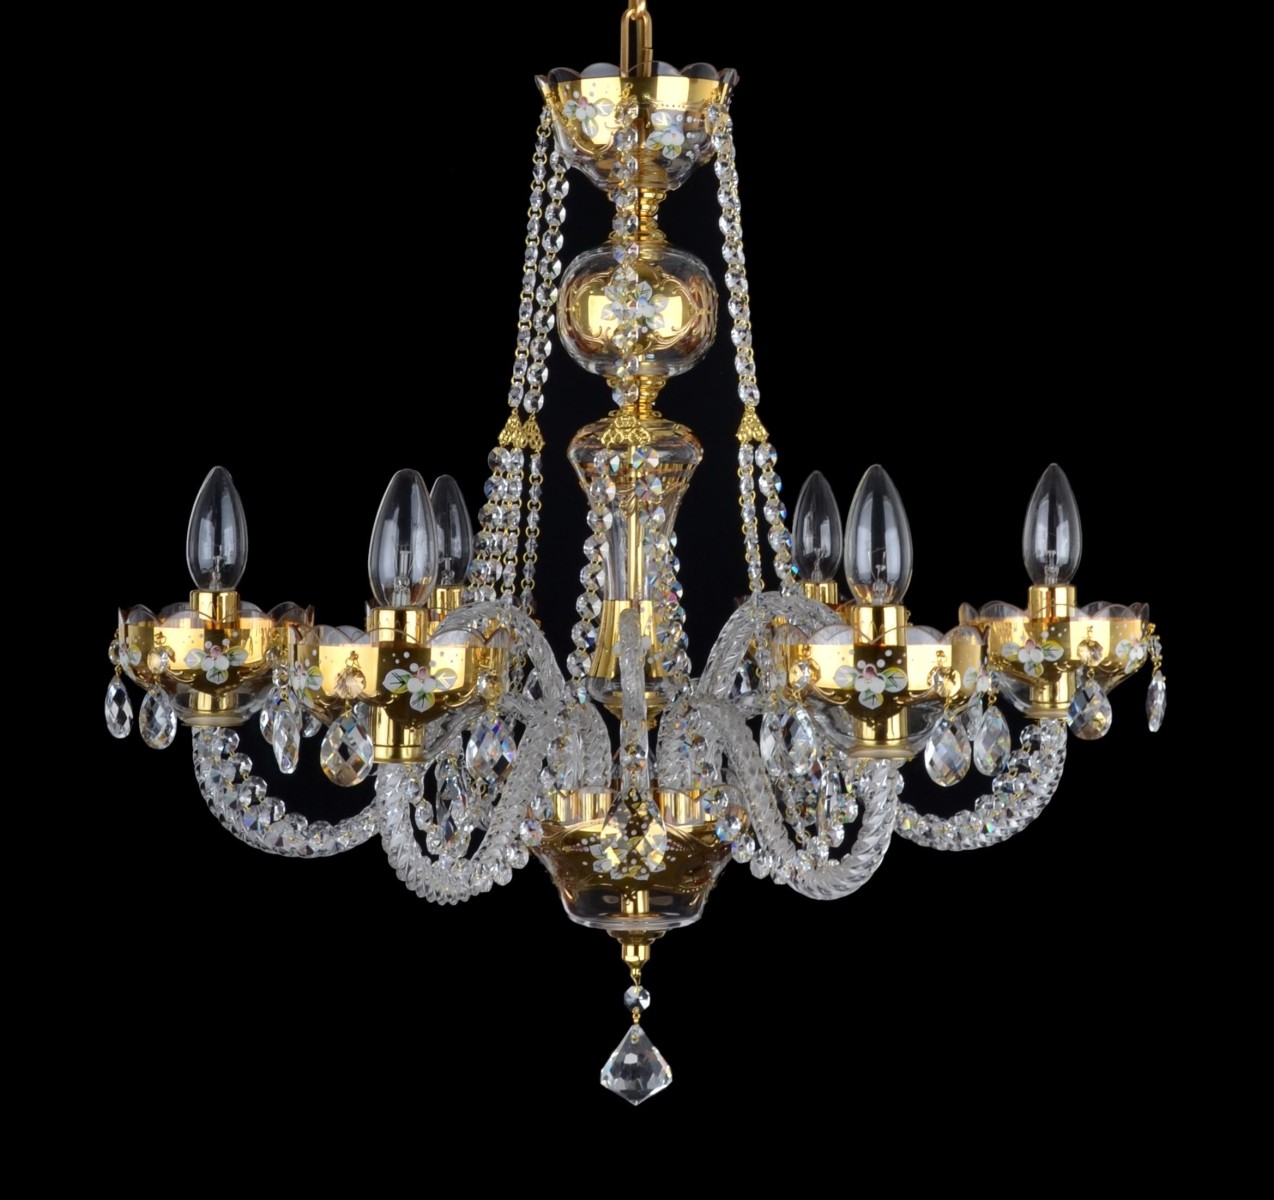 Floral Antique Gold & Clear Crystal Large 6 Arm Chandelier Ceiling Light